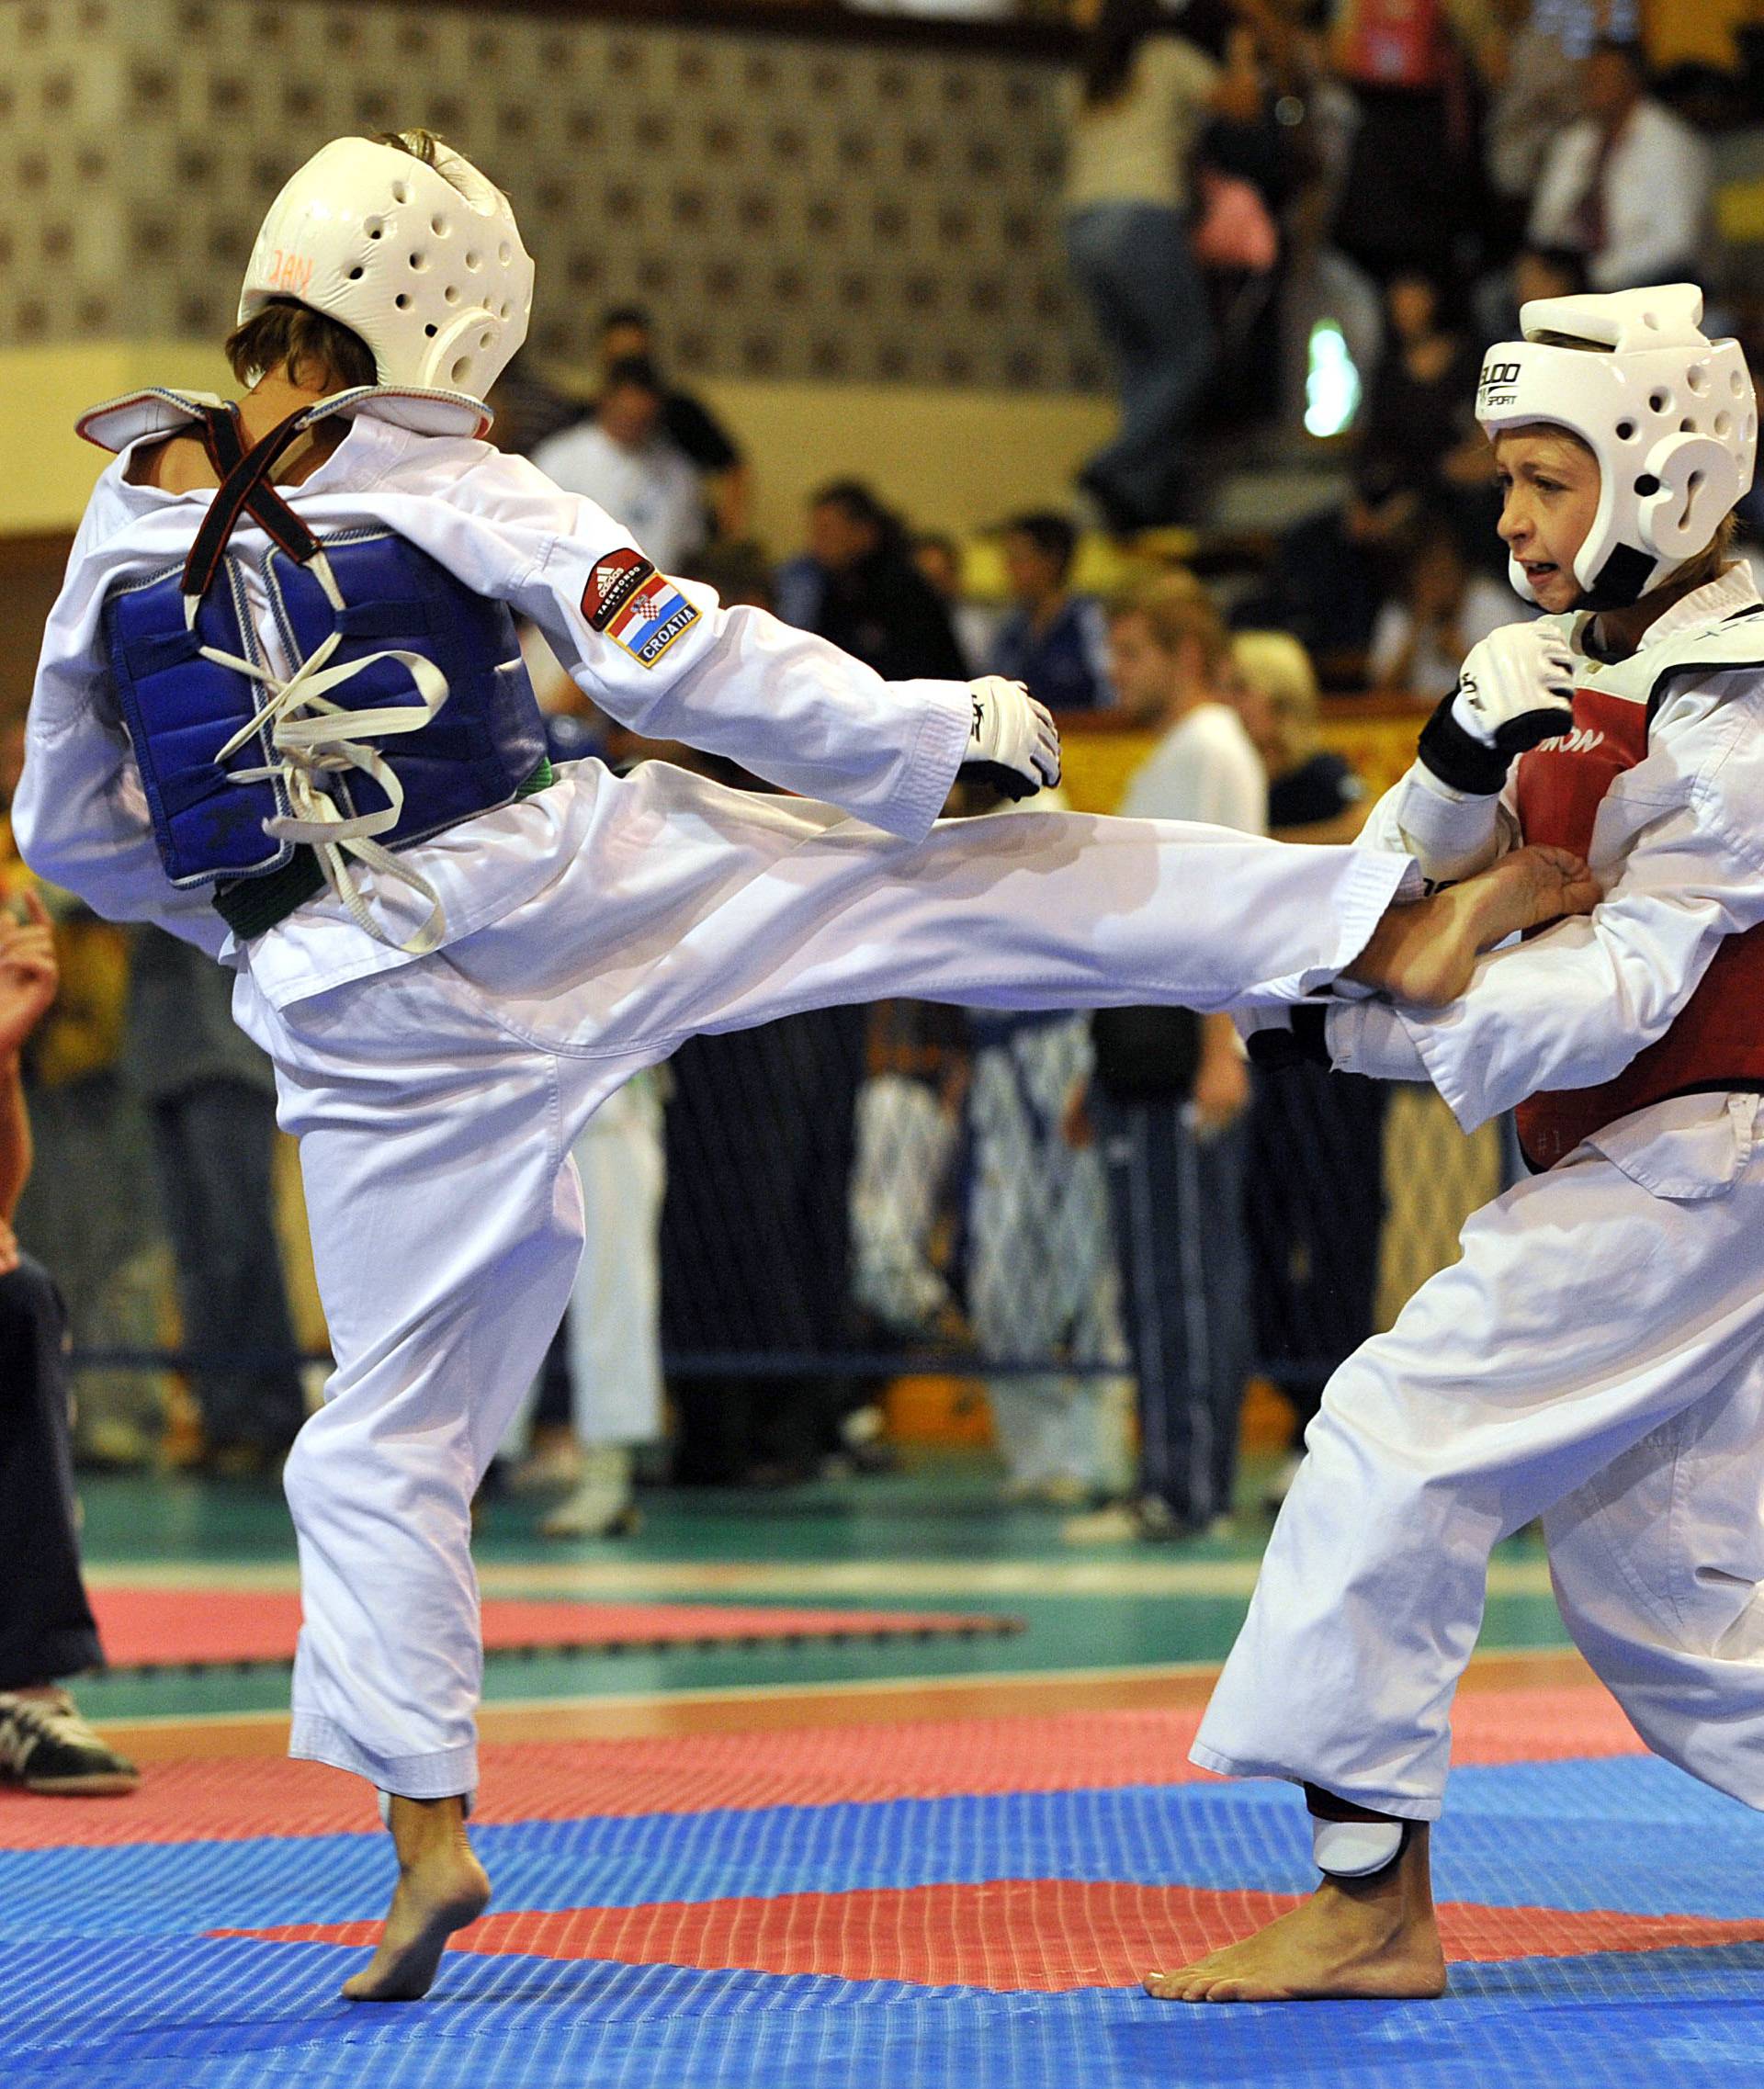 Taekwondo turnir u Zagrebu i za beskućnike, ulaz besplatan